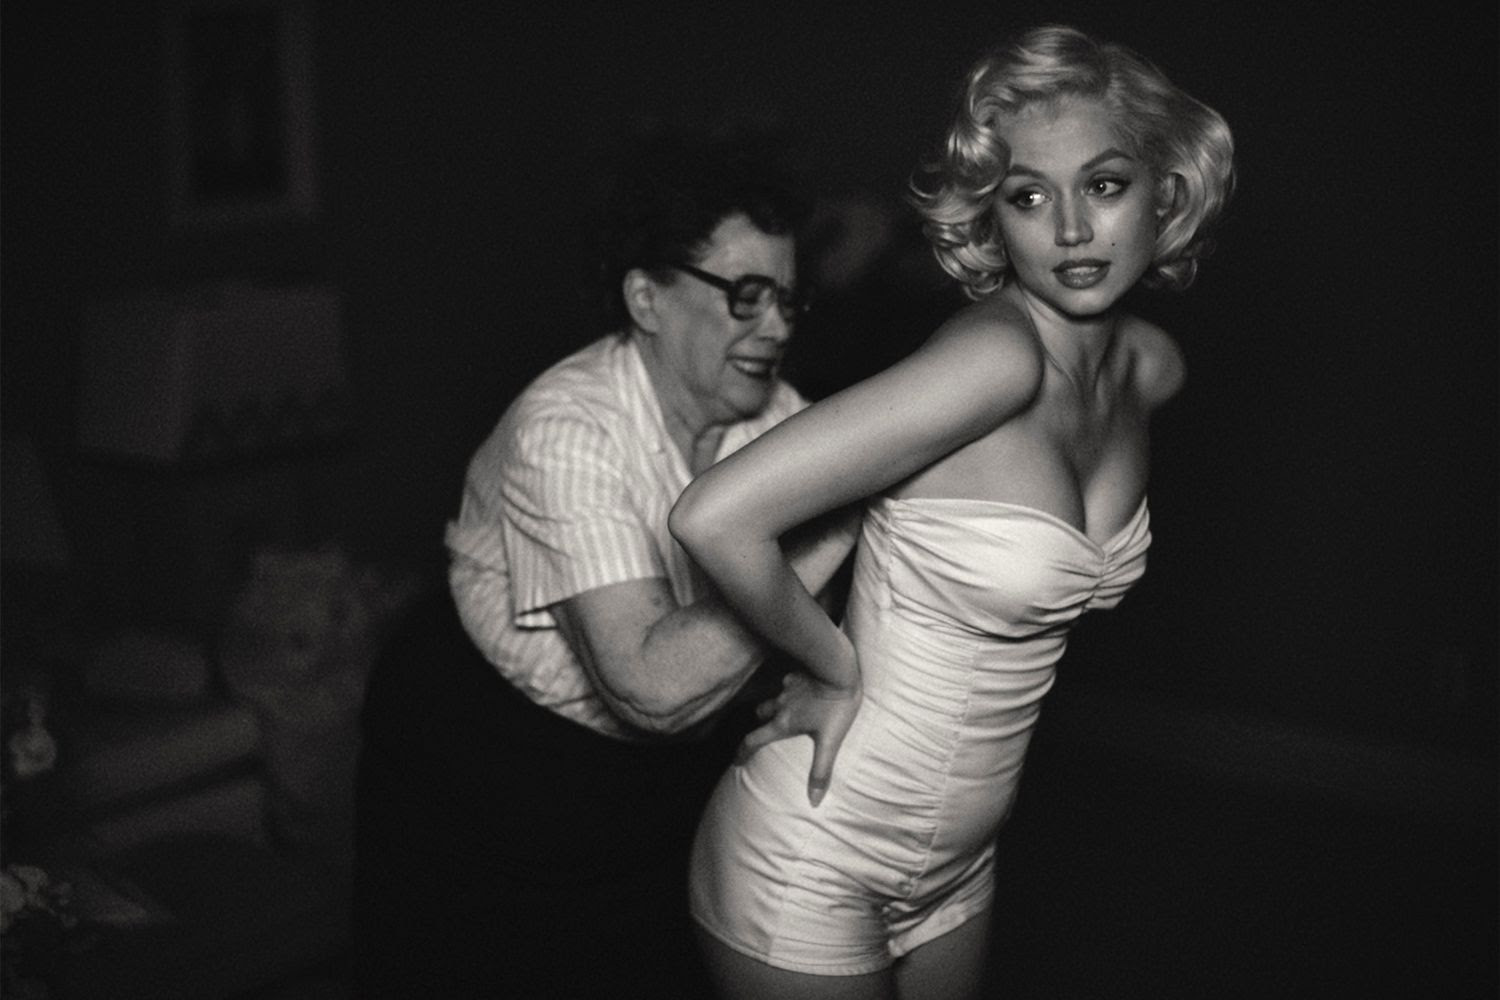 Marilyn Monroe portrayer Ana de Armas on Blonde, sex and nudity